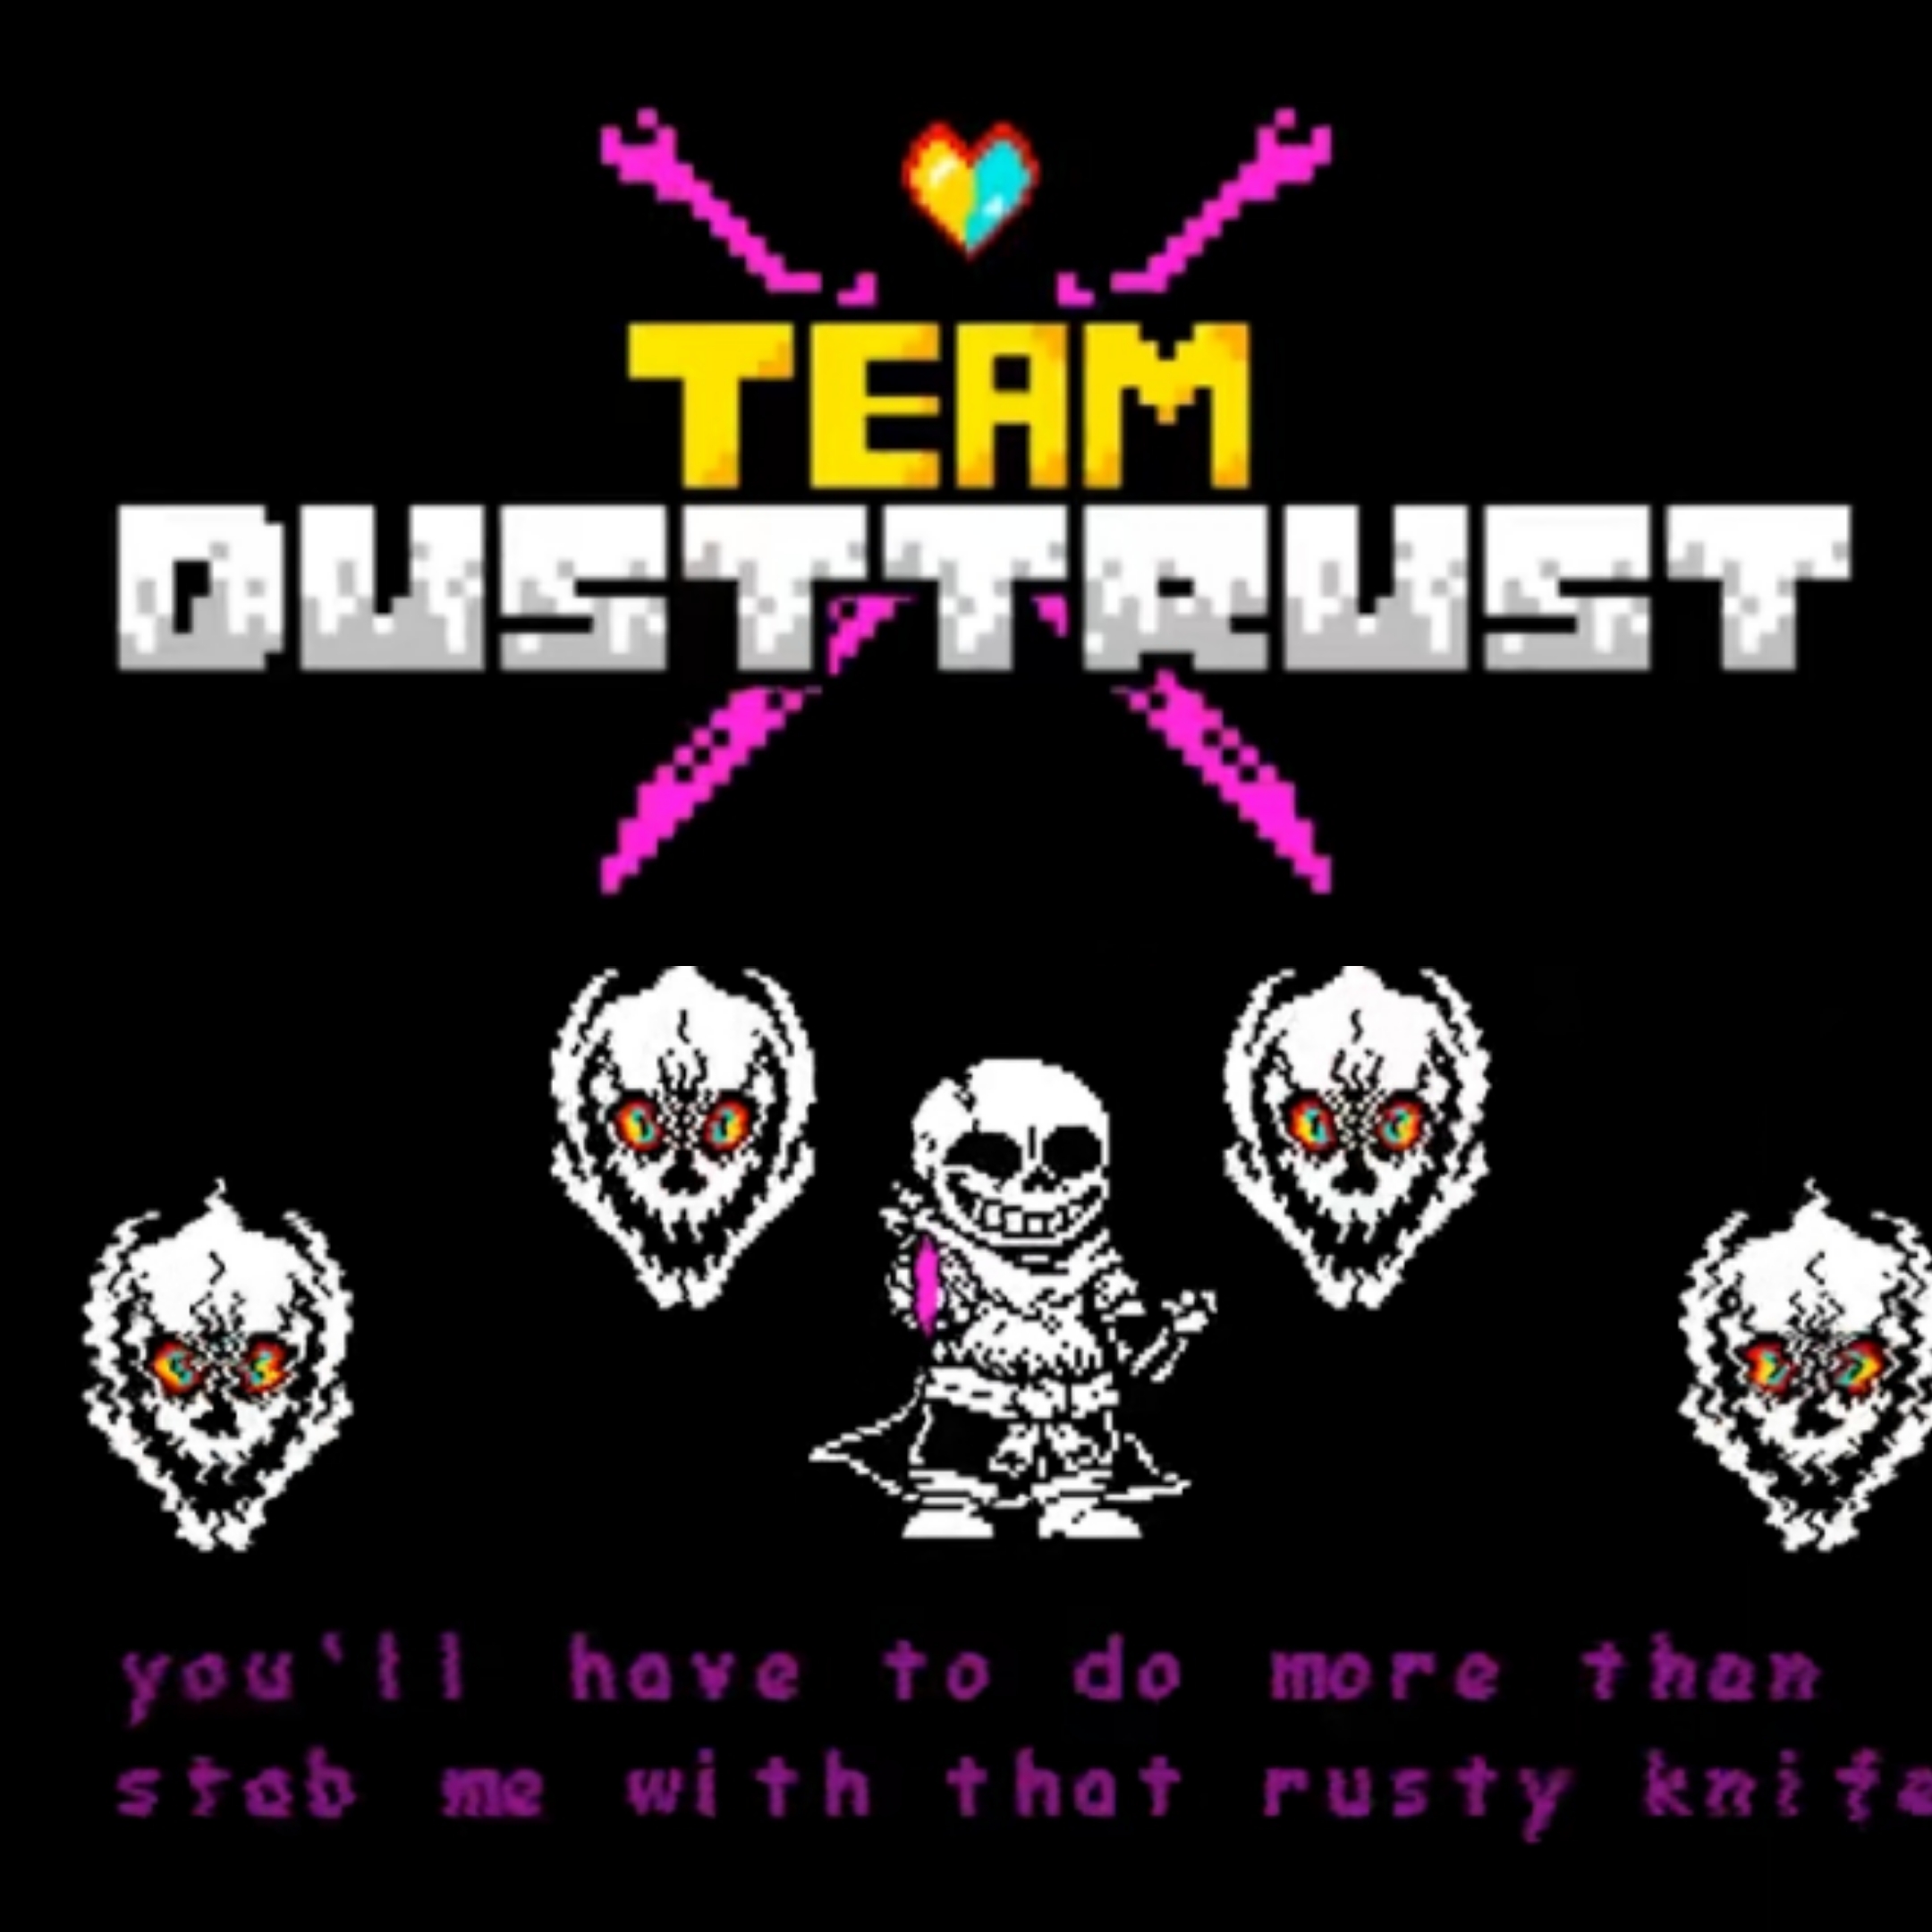 dusttrust